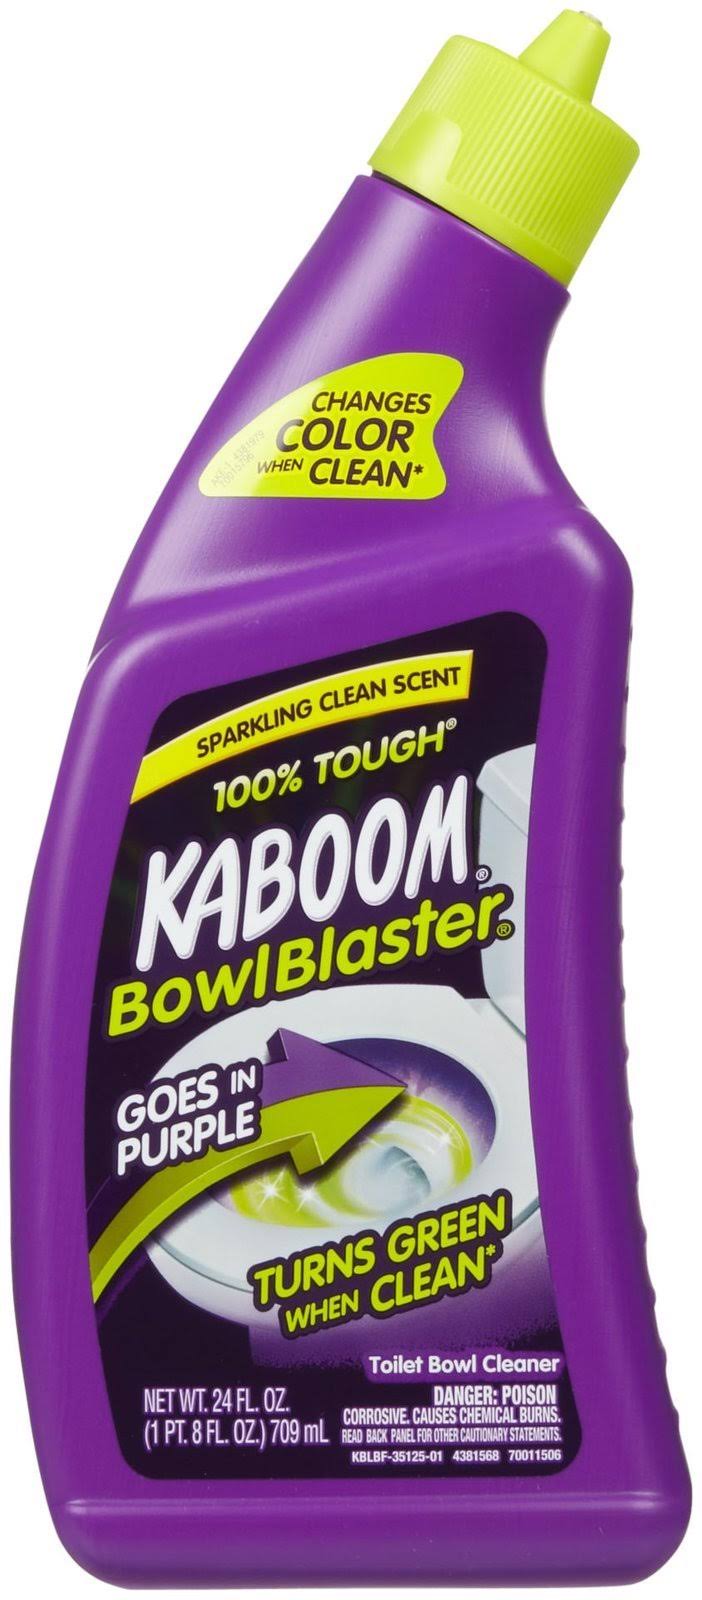 Kaboom Bowl Blaster Toilet Bowl Cleaner - 24oz